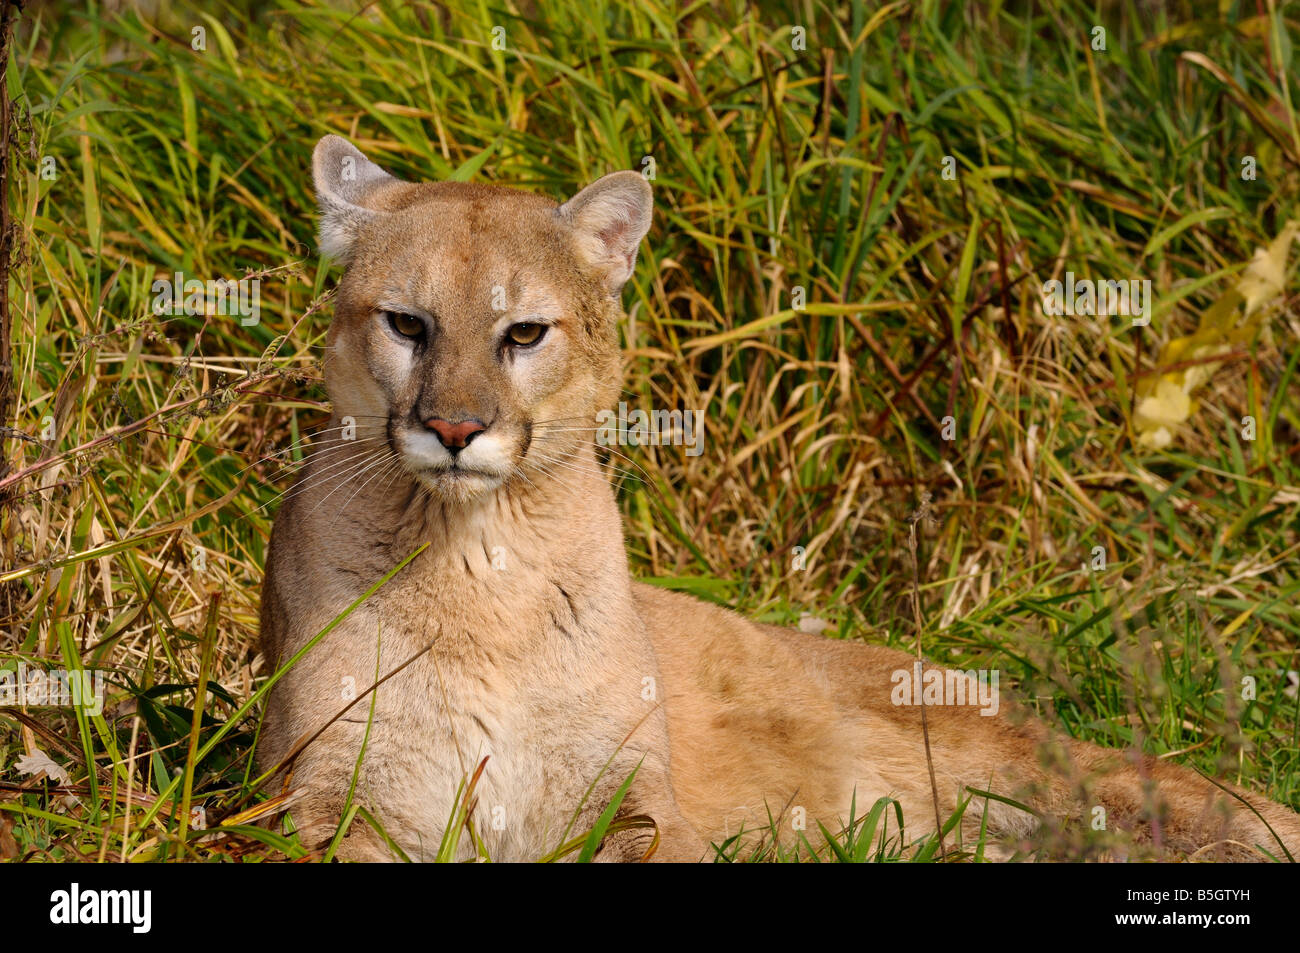 Puma könig -Fotos und -Bildmaterial in hoher Auflösung – Alamy